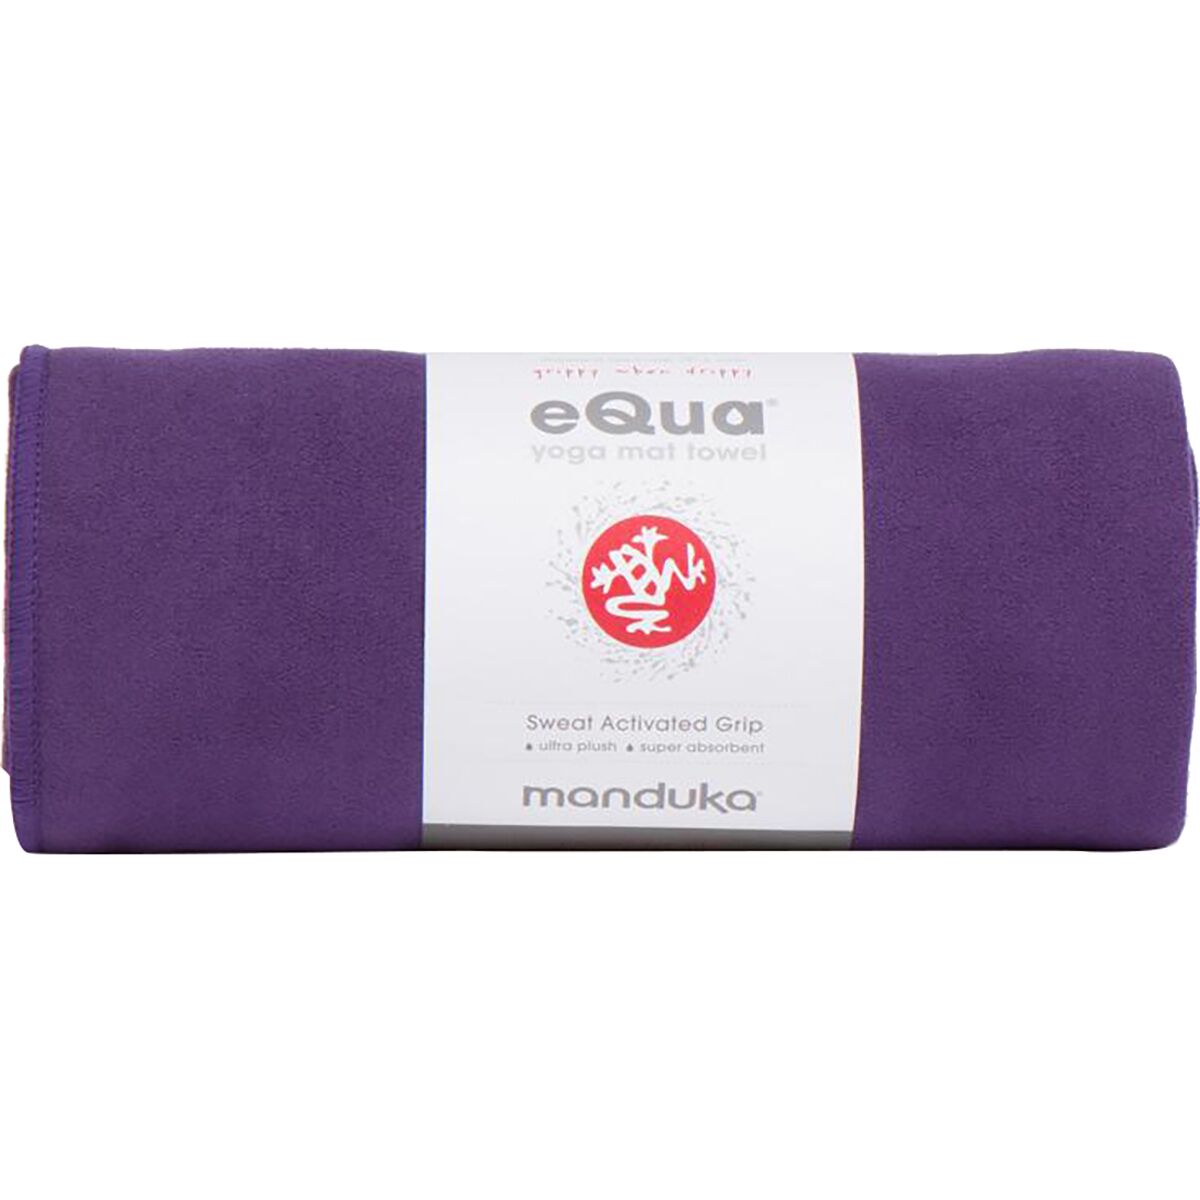 Manduka eQua Yoga Mat Towel - Men